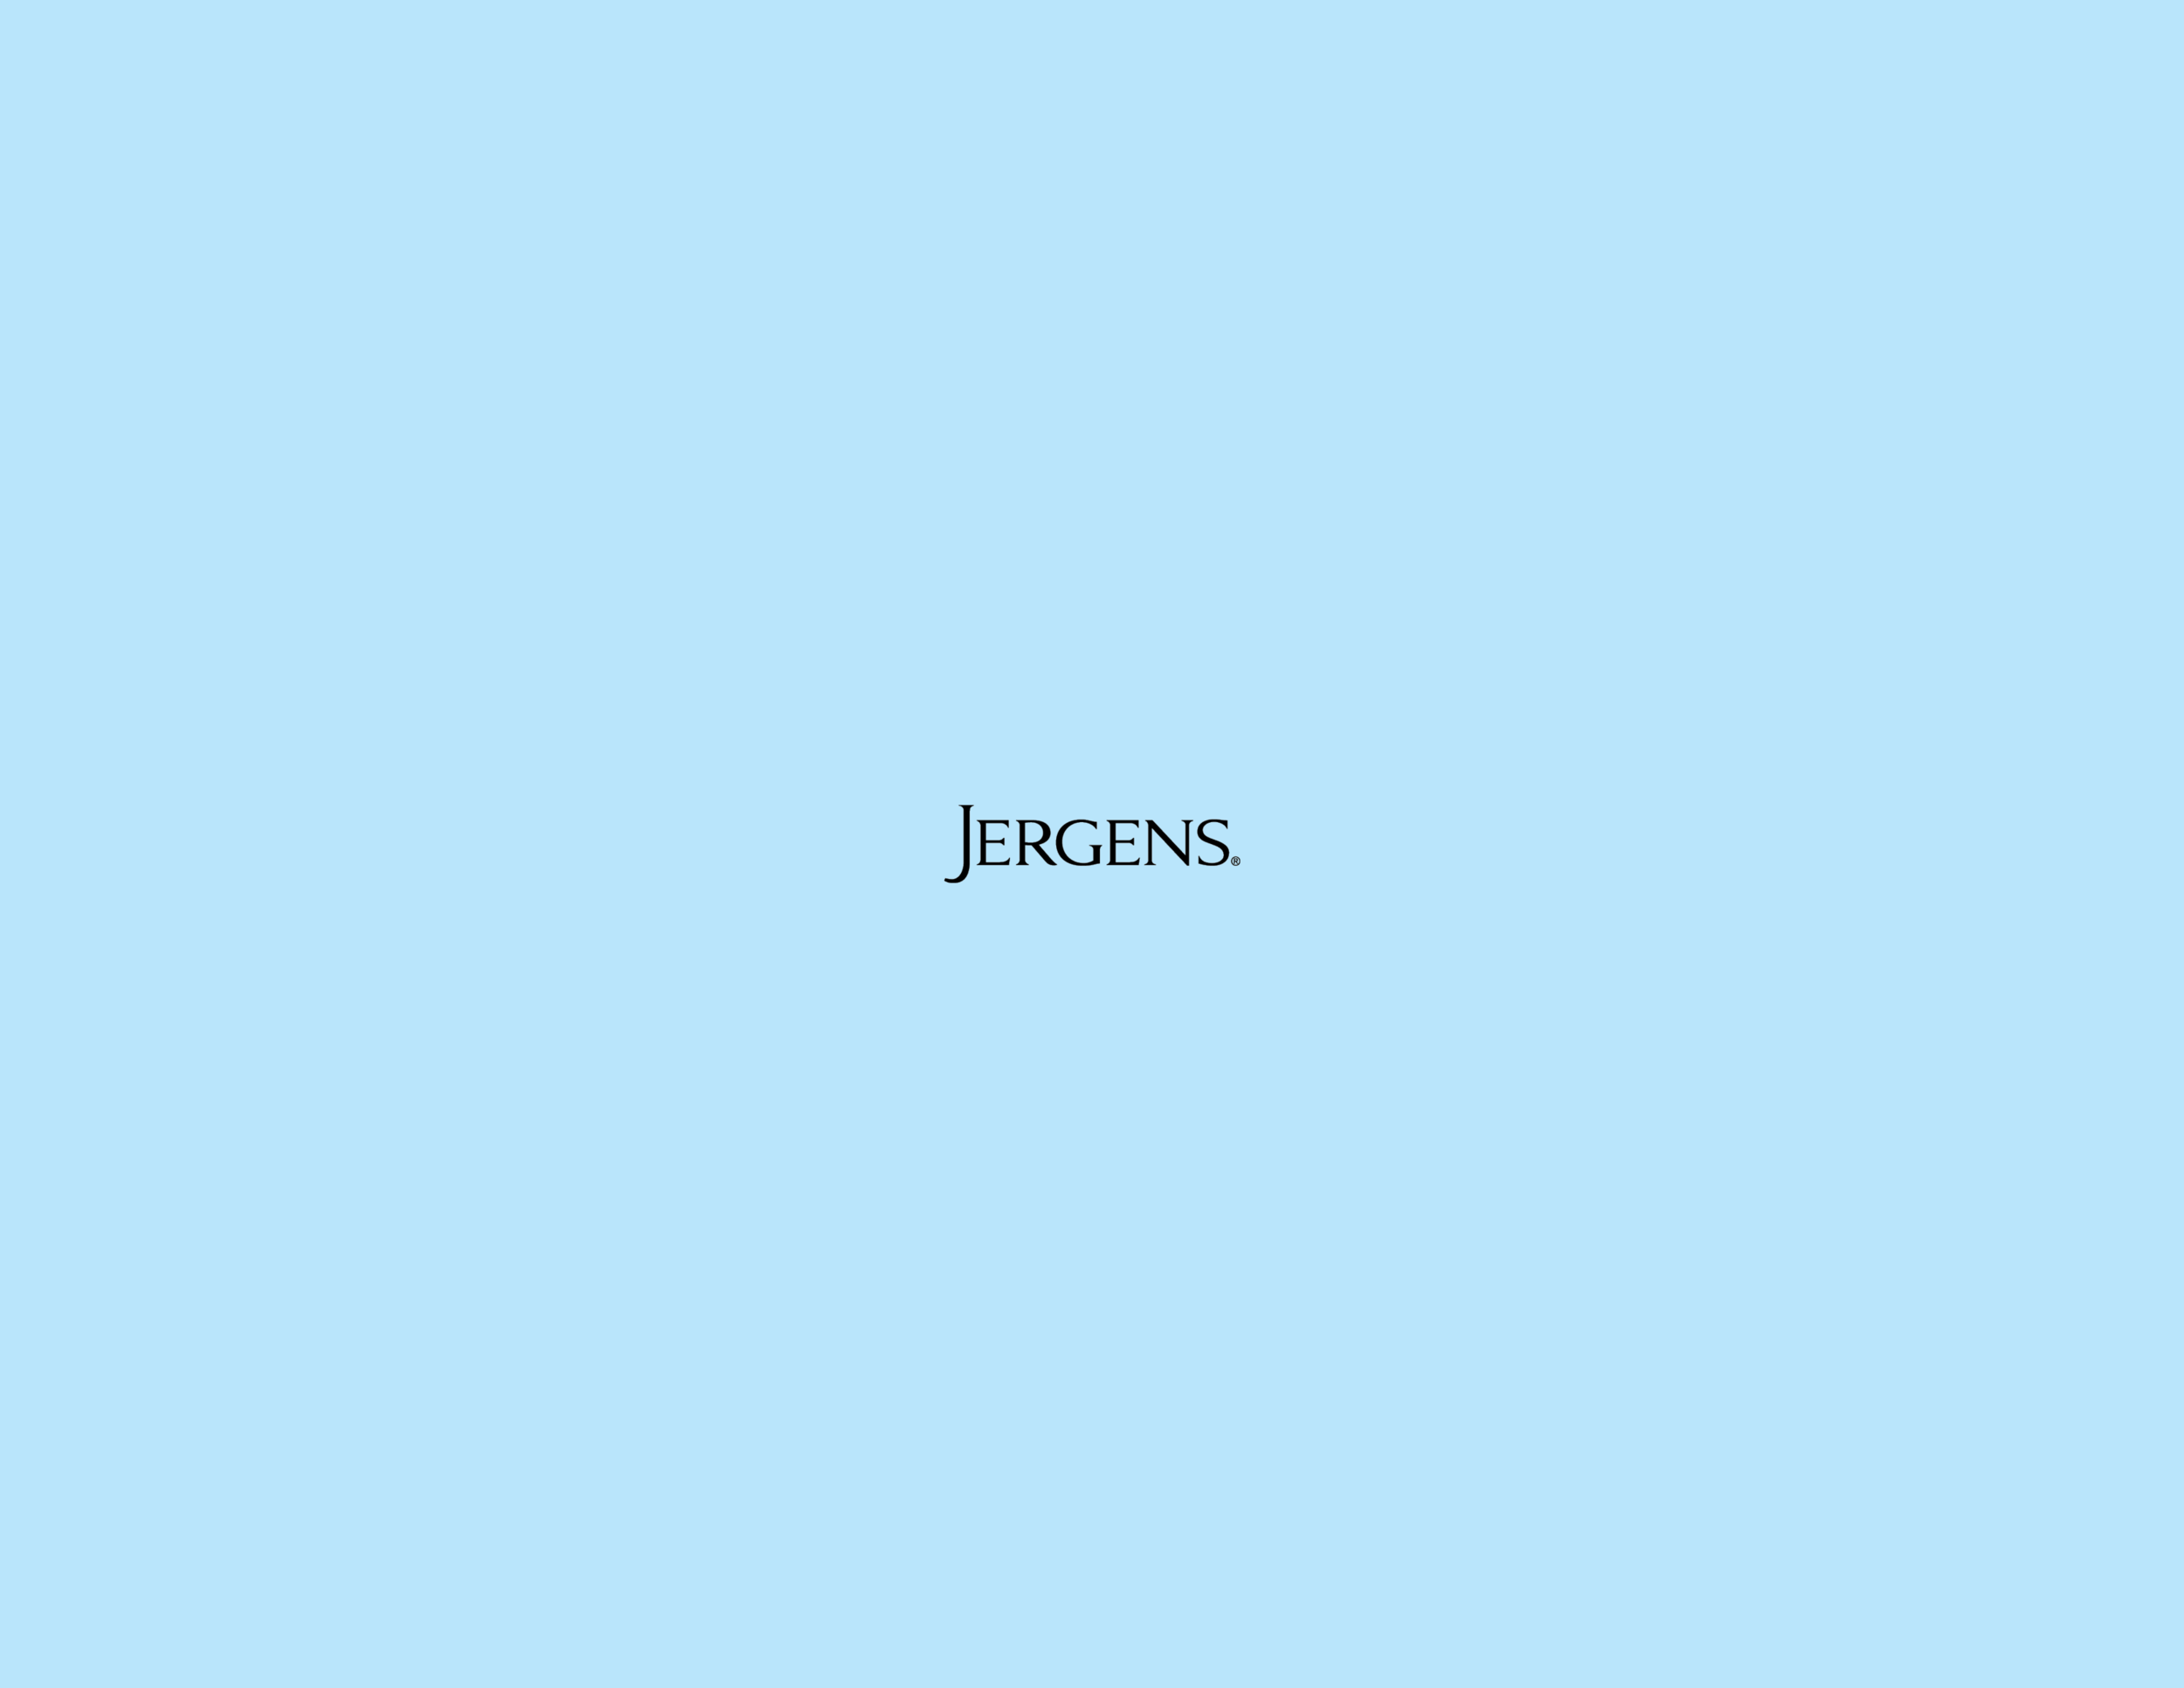 Jergens — Bea Bueno / Art Director